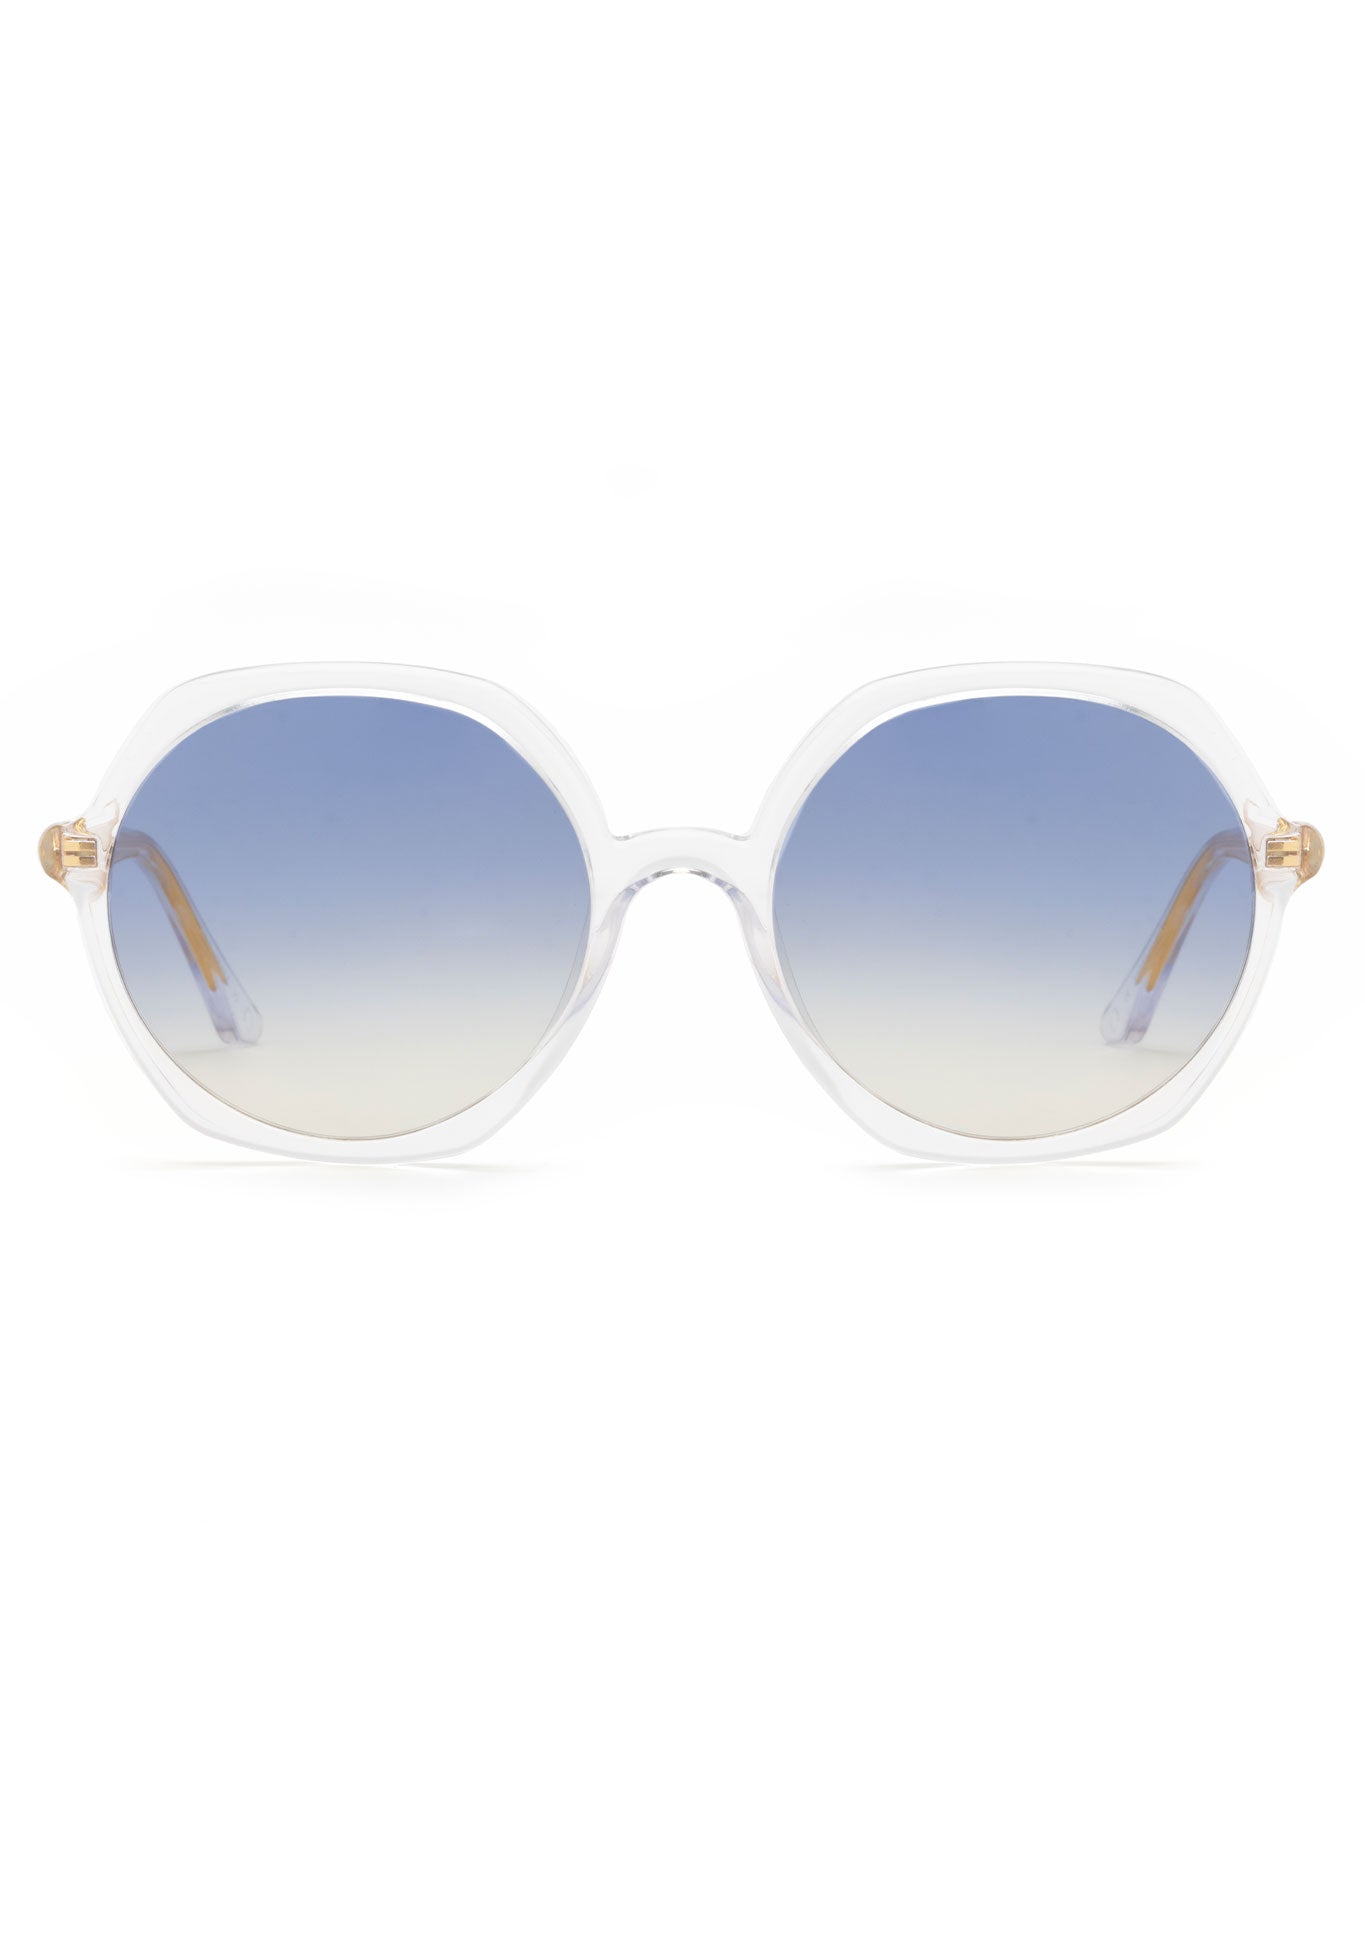 KREWE SUNGLASSES - SOPHIA | Crystal + Custom Vanity Tint handcrafted, luxury oversized round sunglasses with blue tinted lenses